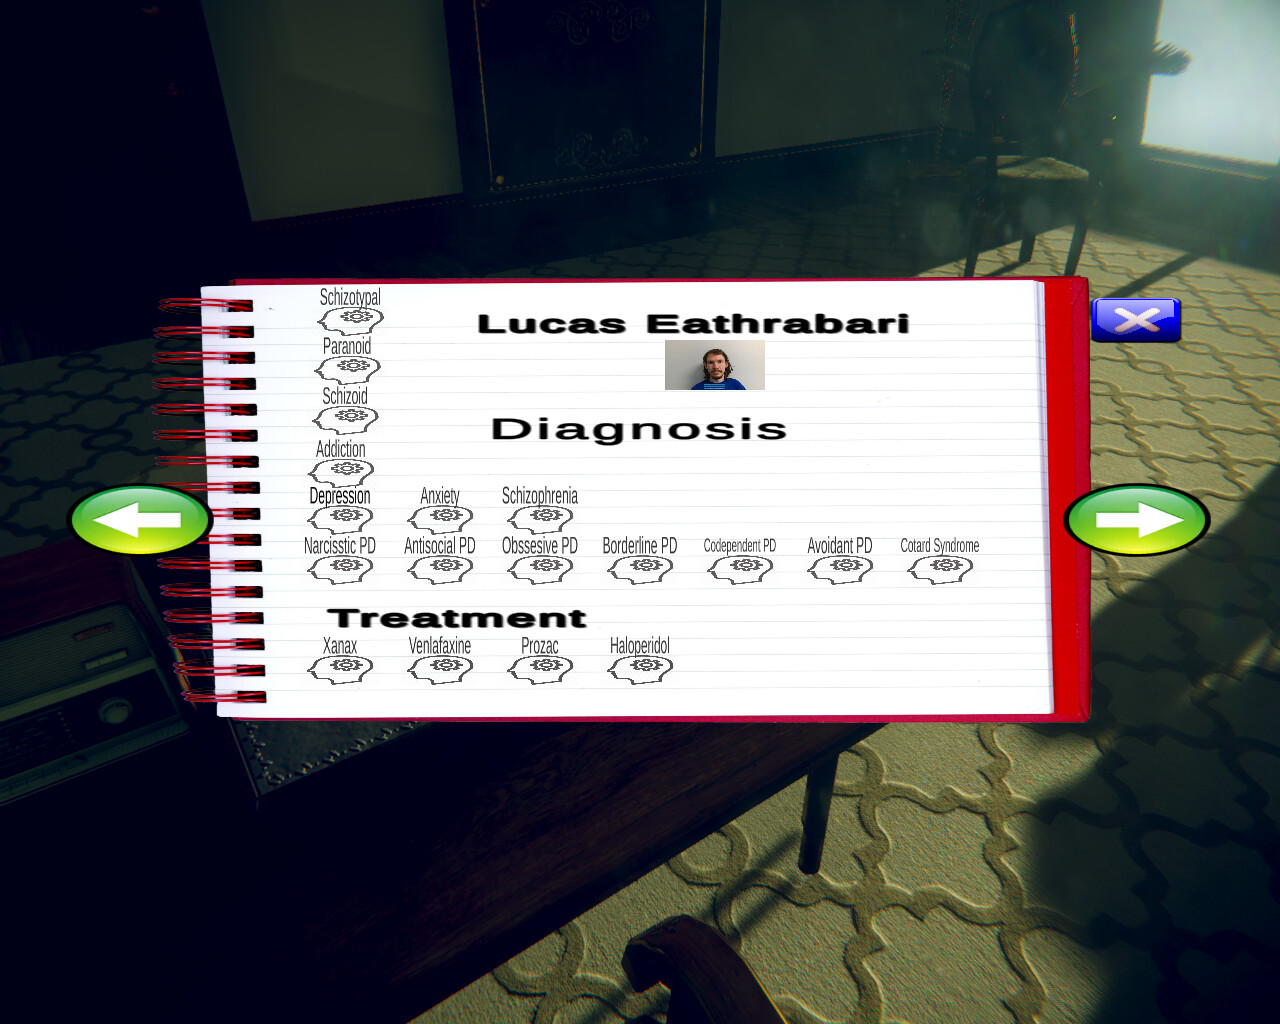 Psychiatrist Simulator 2 Steam CD Key